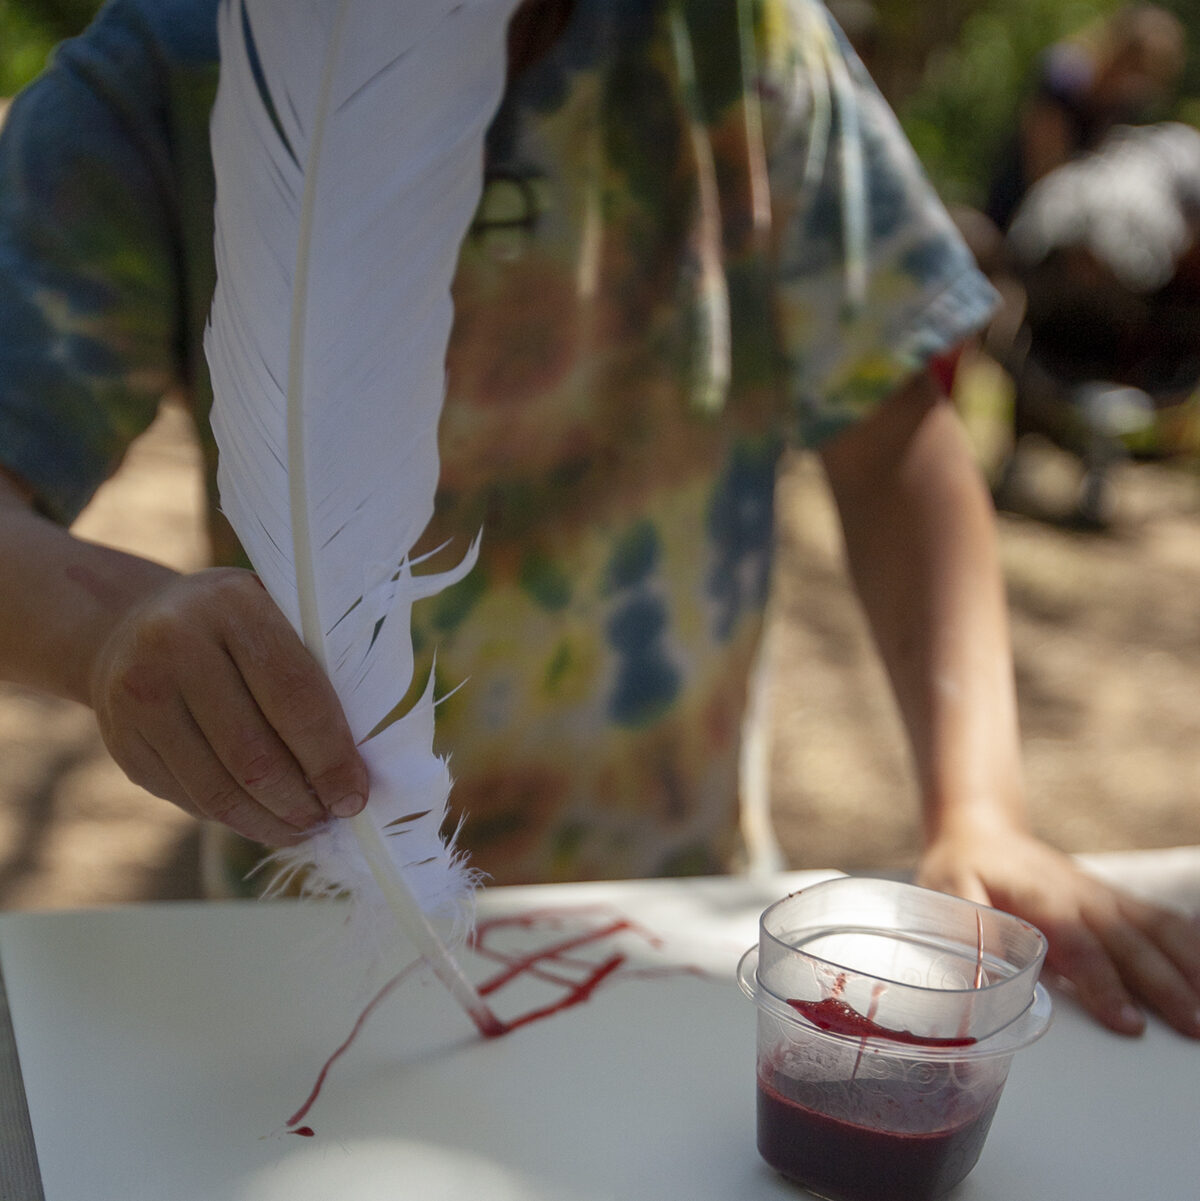 Purple Swirls and Berry Mash: Making Art from Handmade Quills and Ink